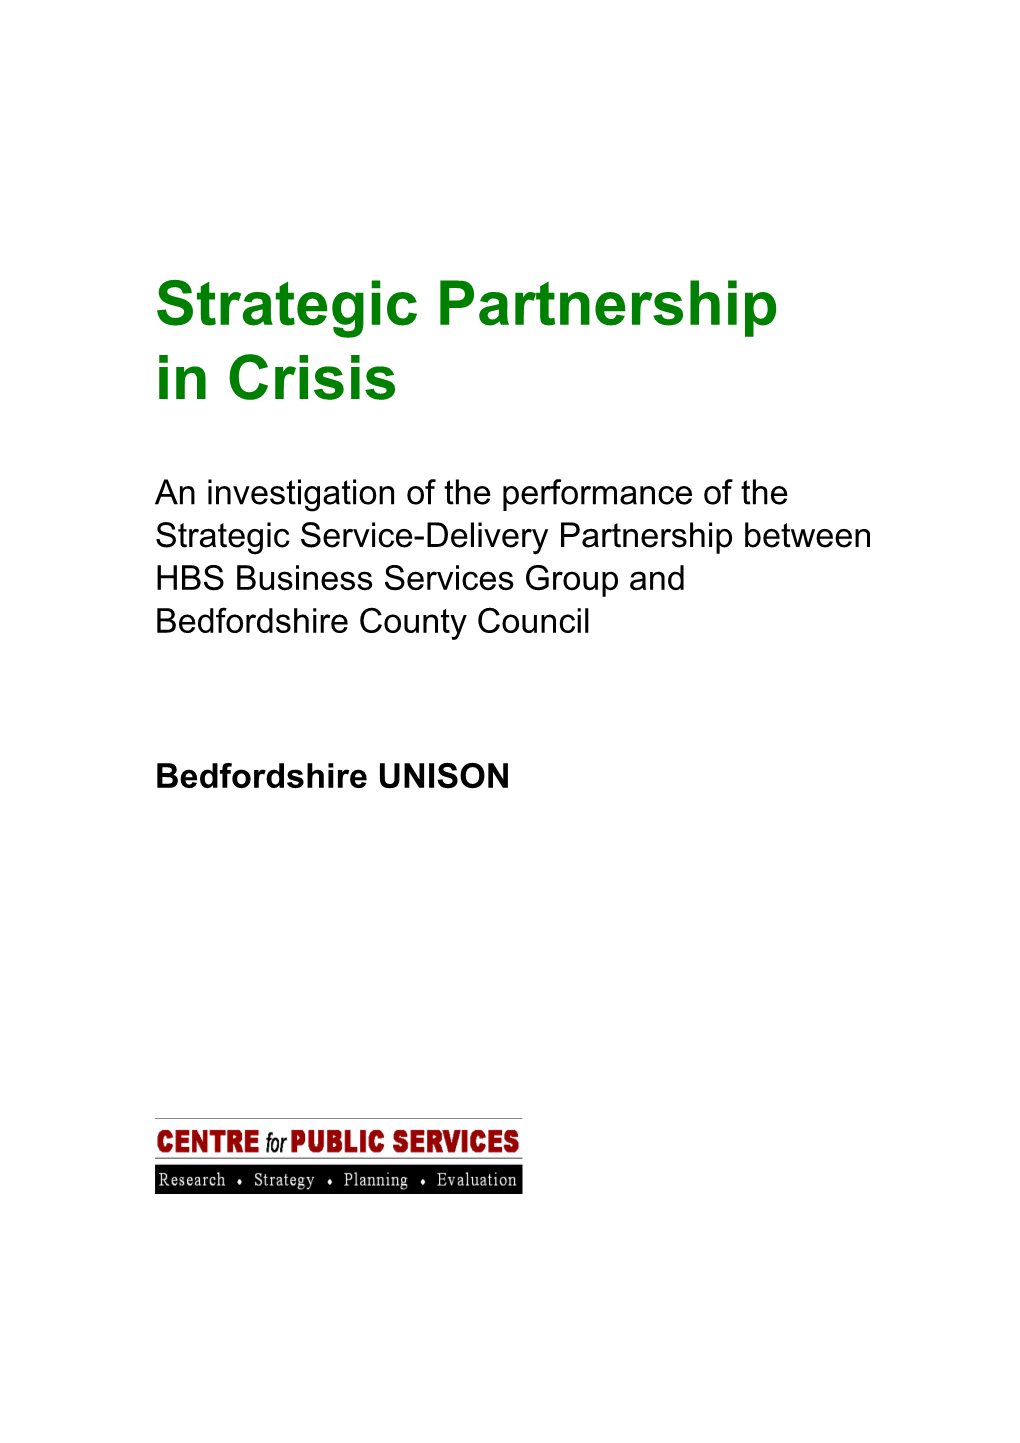 Bedfordshire: Strategic Partnership in Crisis